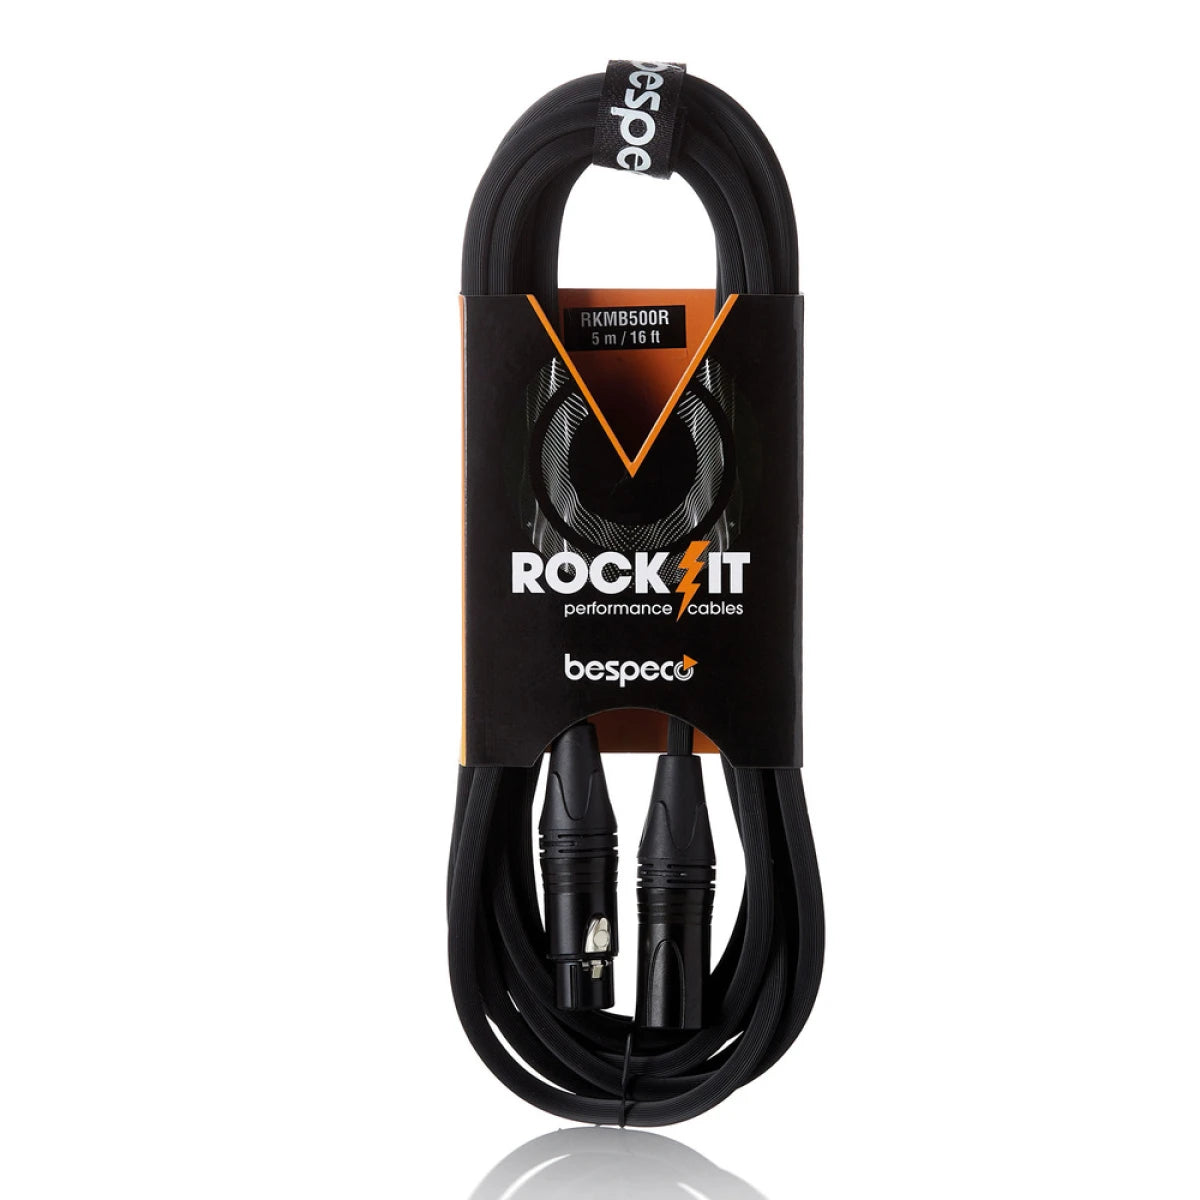 Bespeco Rock-IT, RKJJ450R, Instrument Cable, 4.5m 15ft, Striped Cable, Black